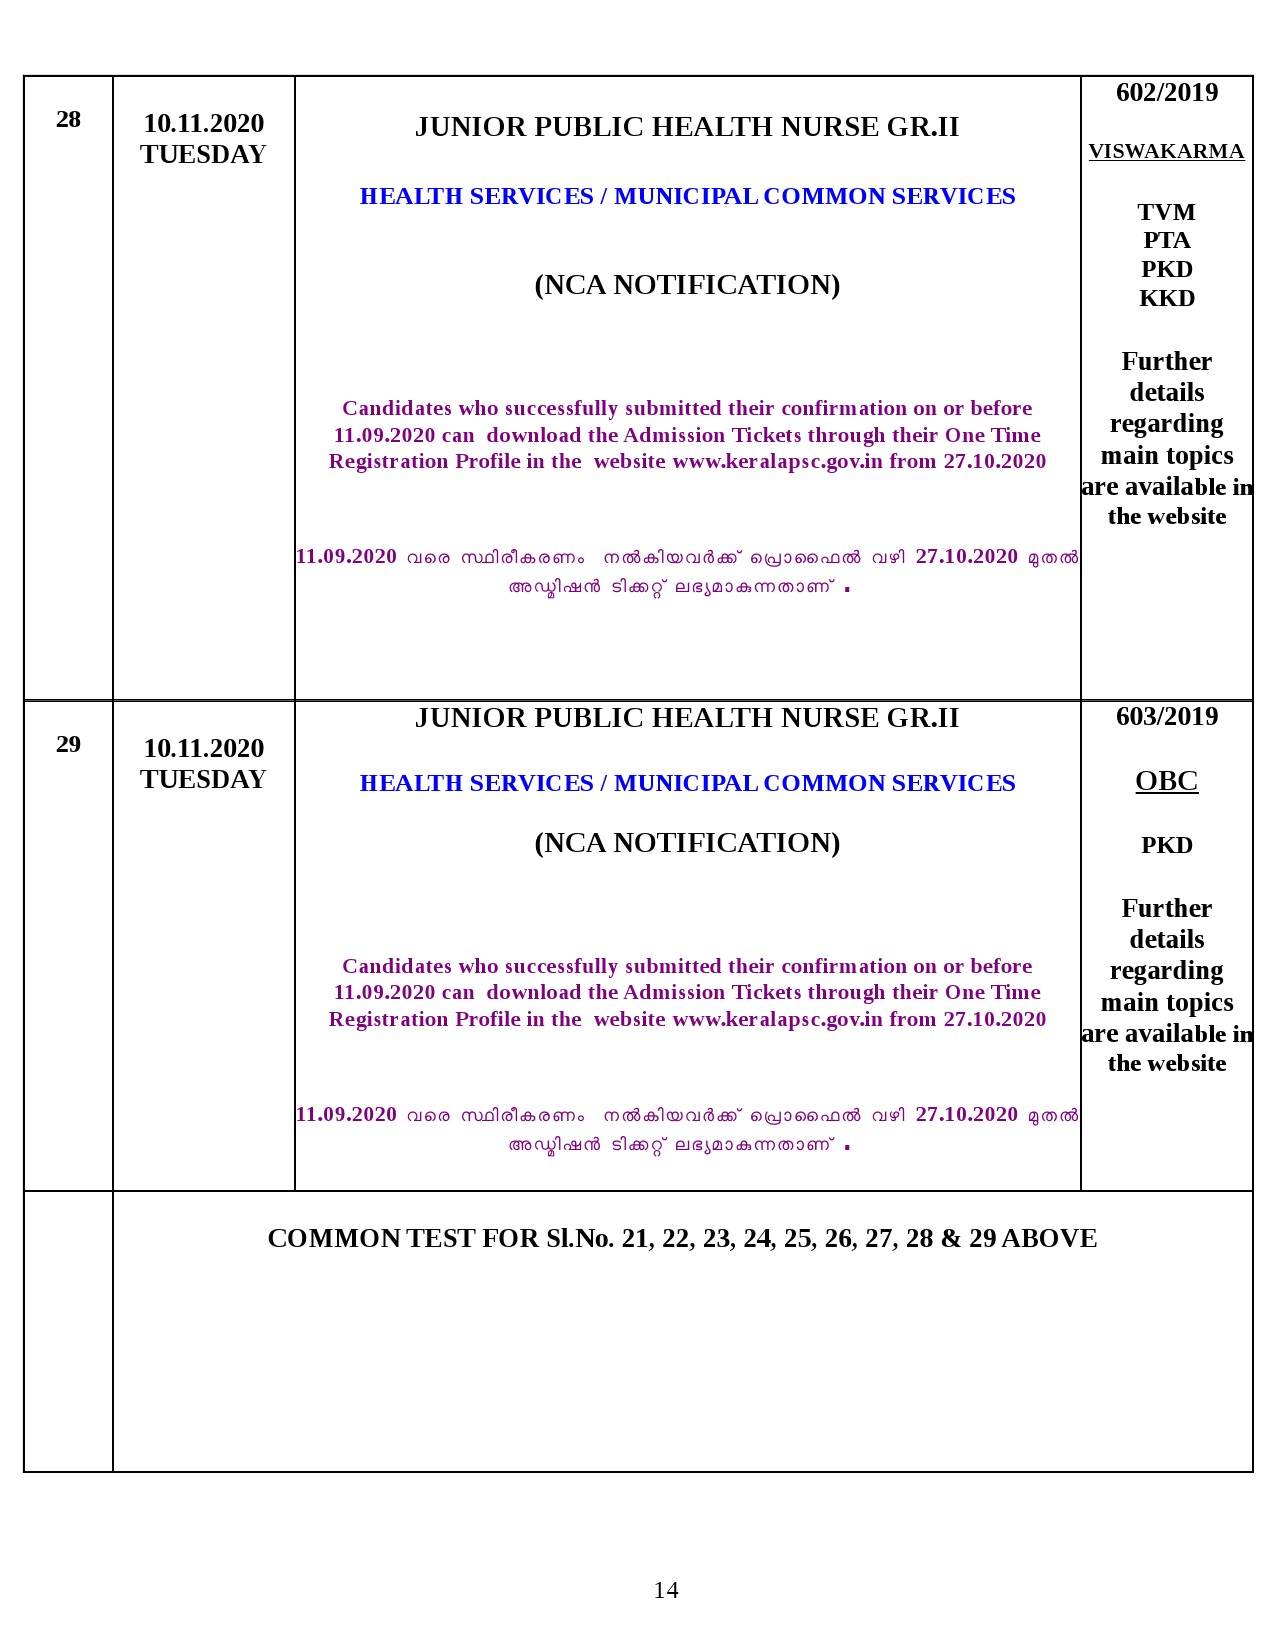 Kerala PSC Final Exam Schedule for November 2020 - Notification Image 14